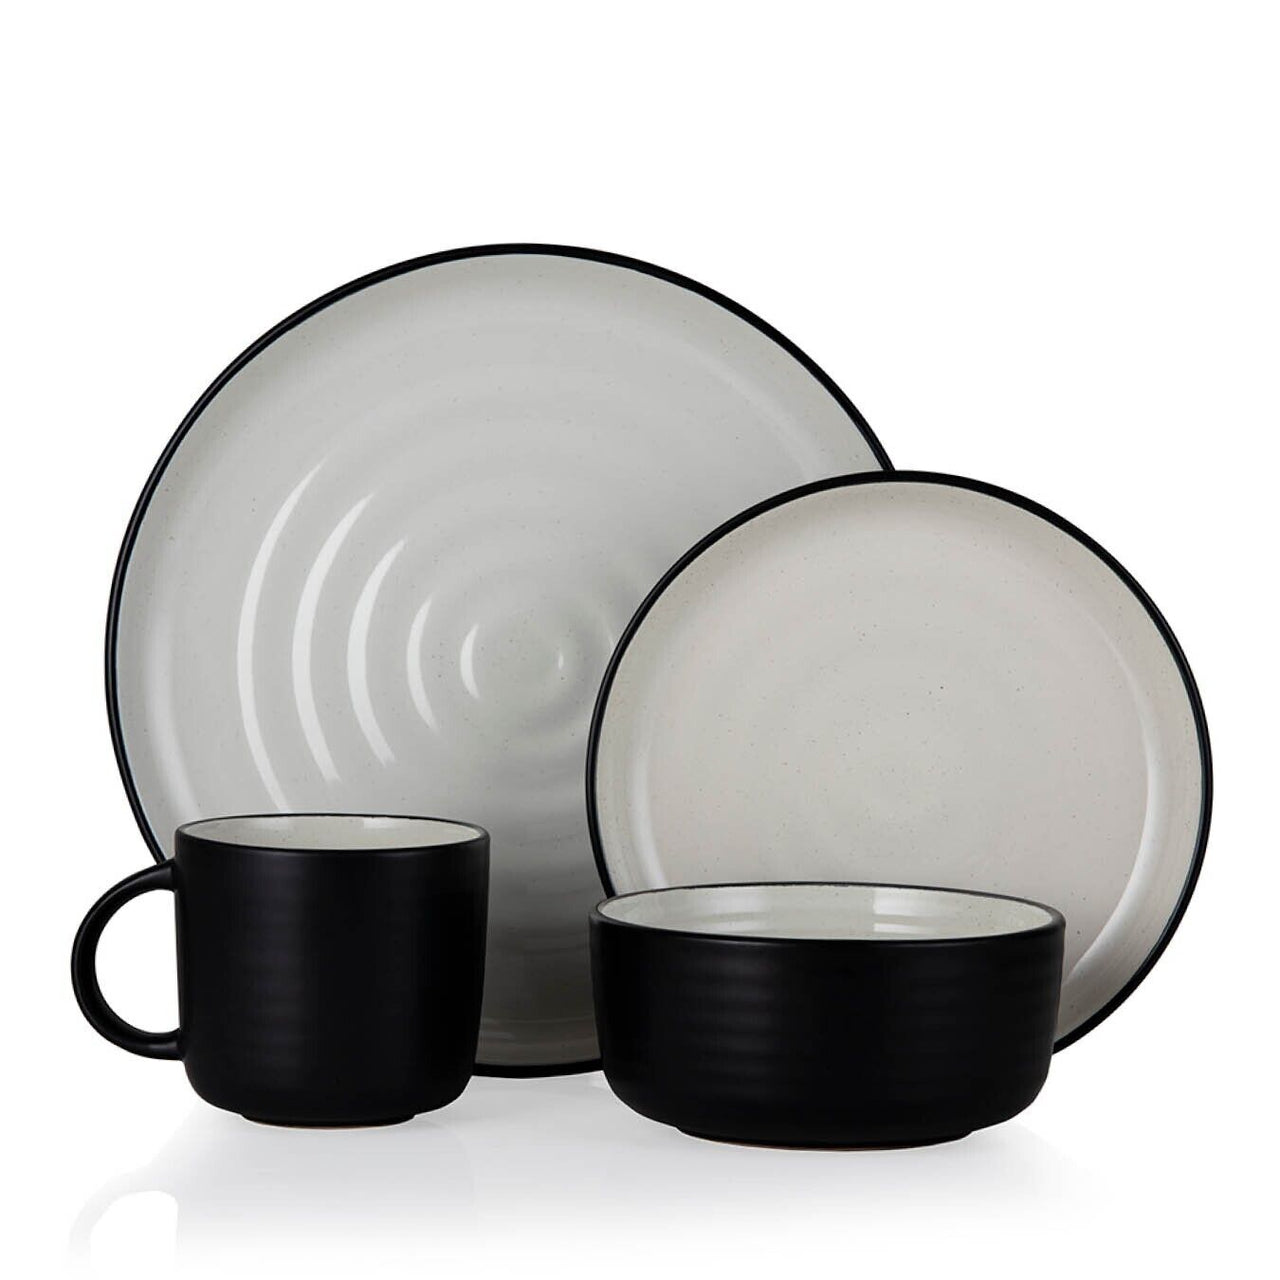 Barbary & Oak Cascade Modern & Contemporary 16 Piece Dinnerware Set in Black & Cream